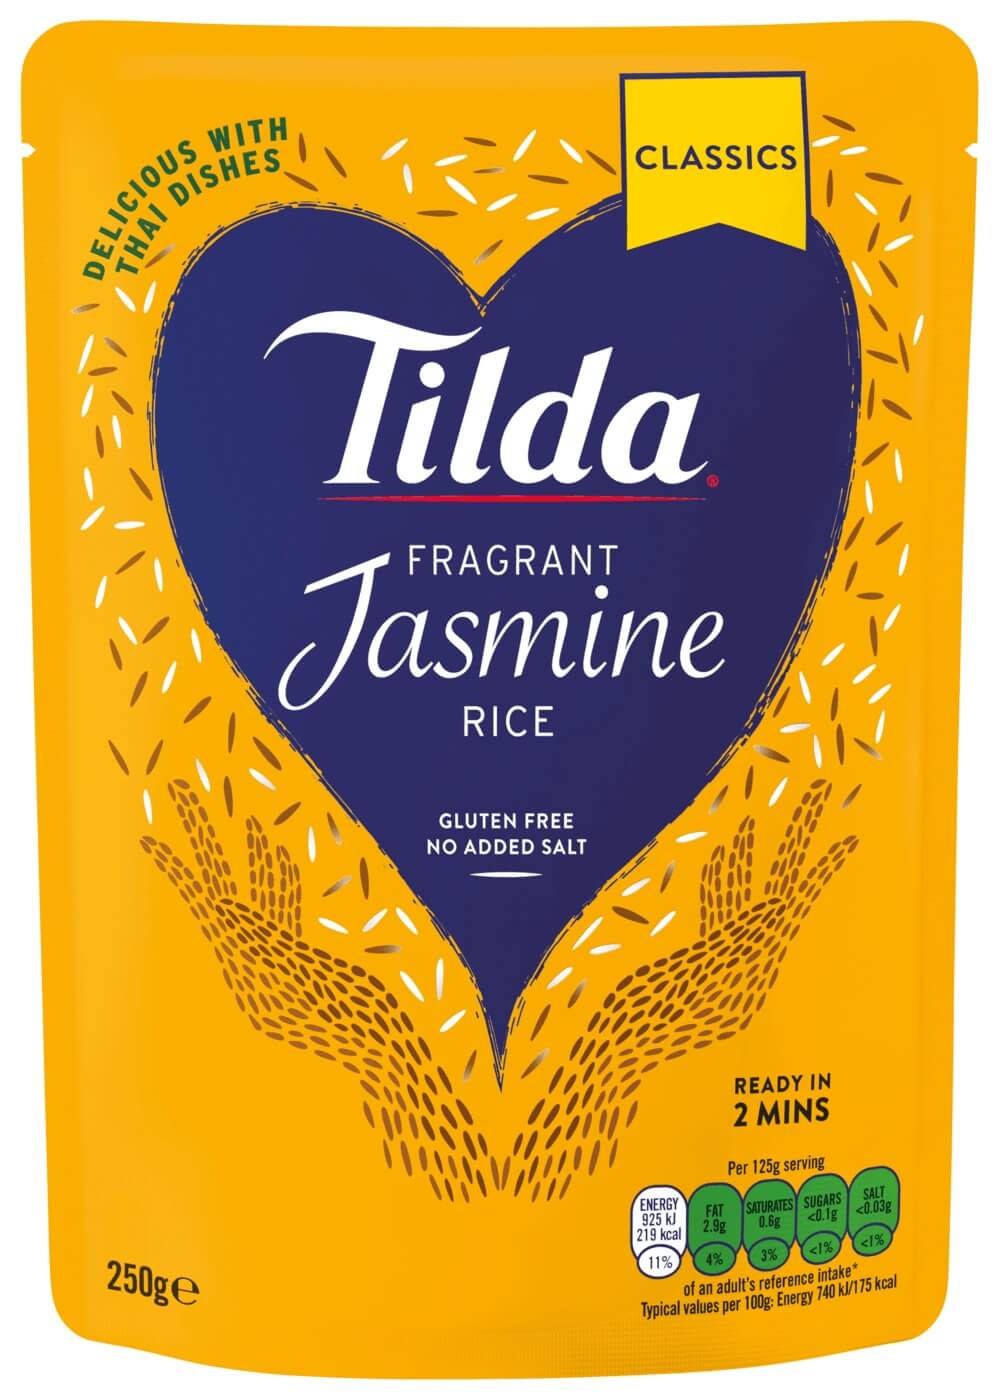 Tilda Steamed Fragrant Jasmine Rice 250g